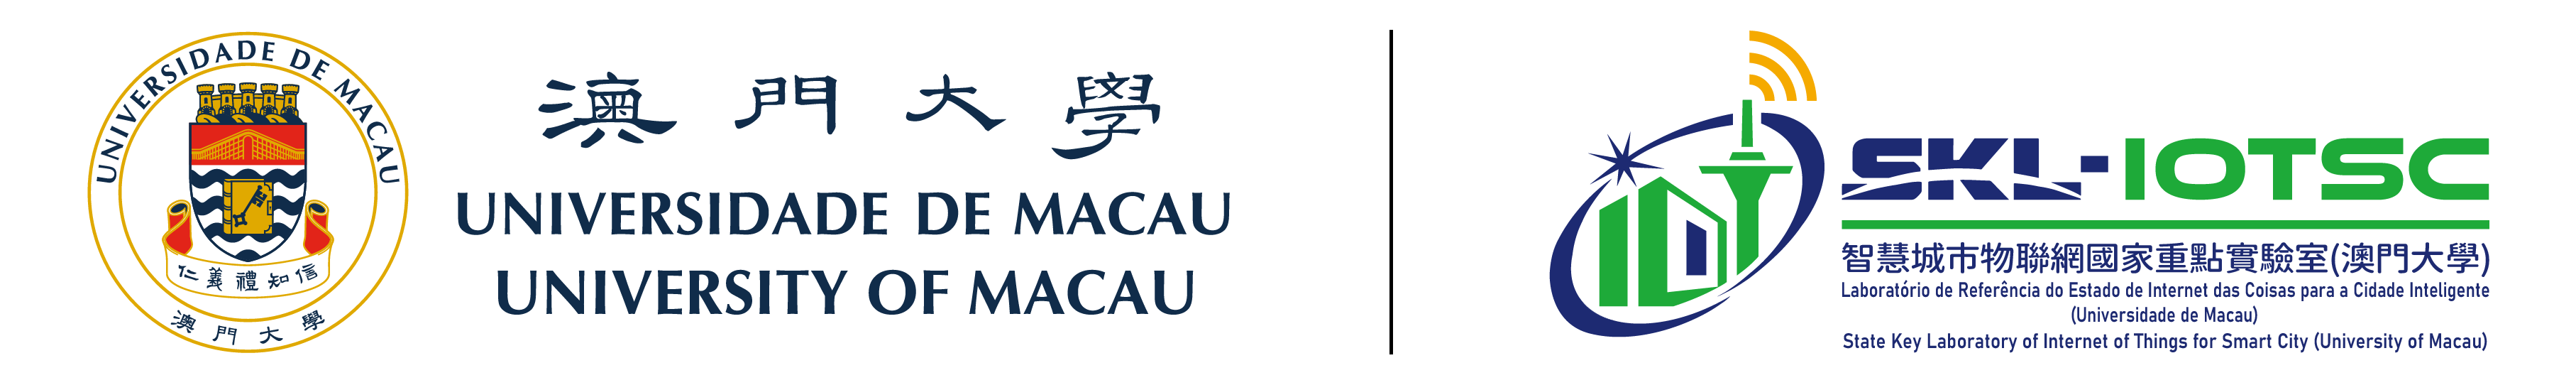 State Key Laboratory of Internet of Things for Smart City | University of Macau Logo